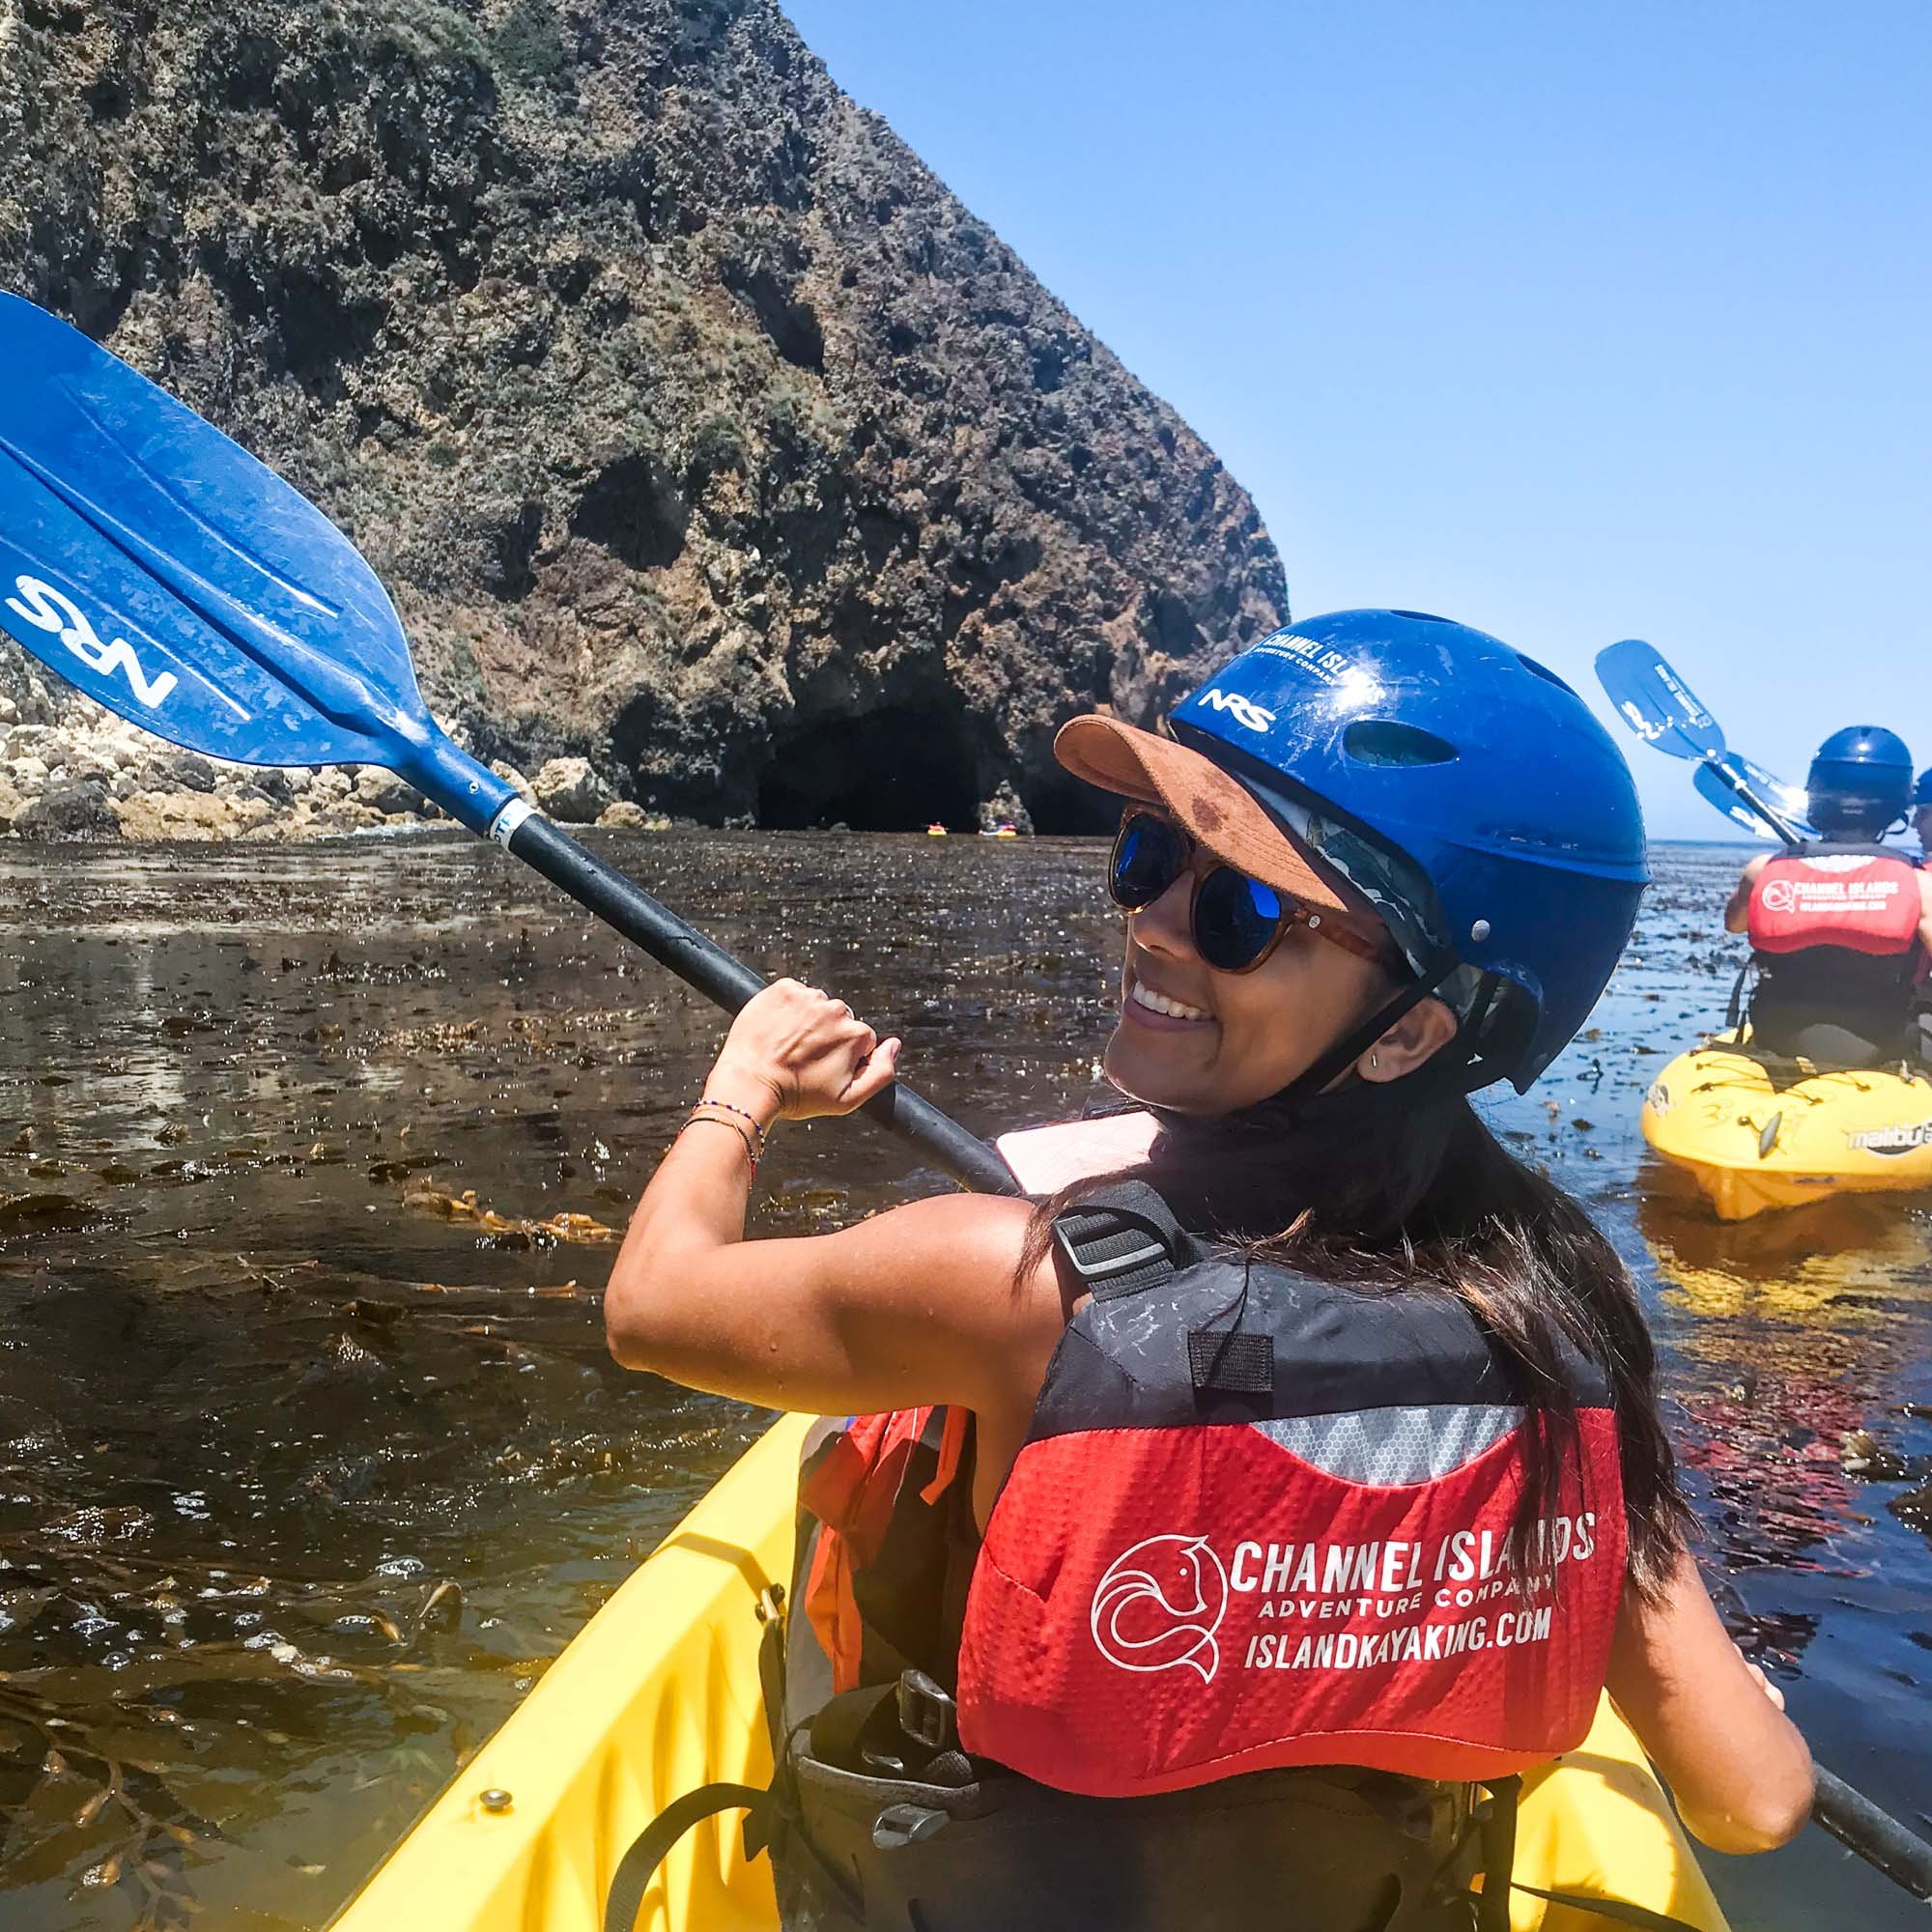 Kayak through Sea Caves on One of the West Coast’s Uninhabited Islands